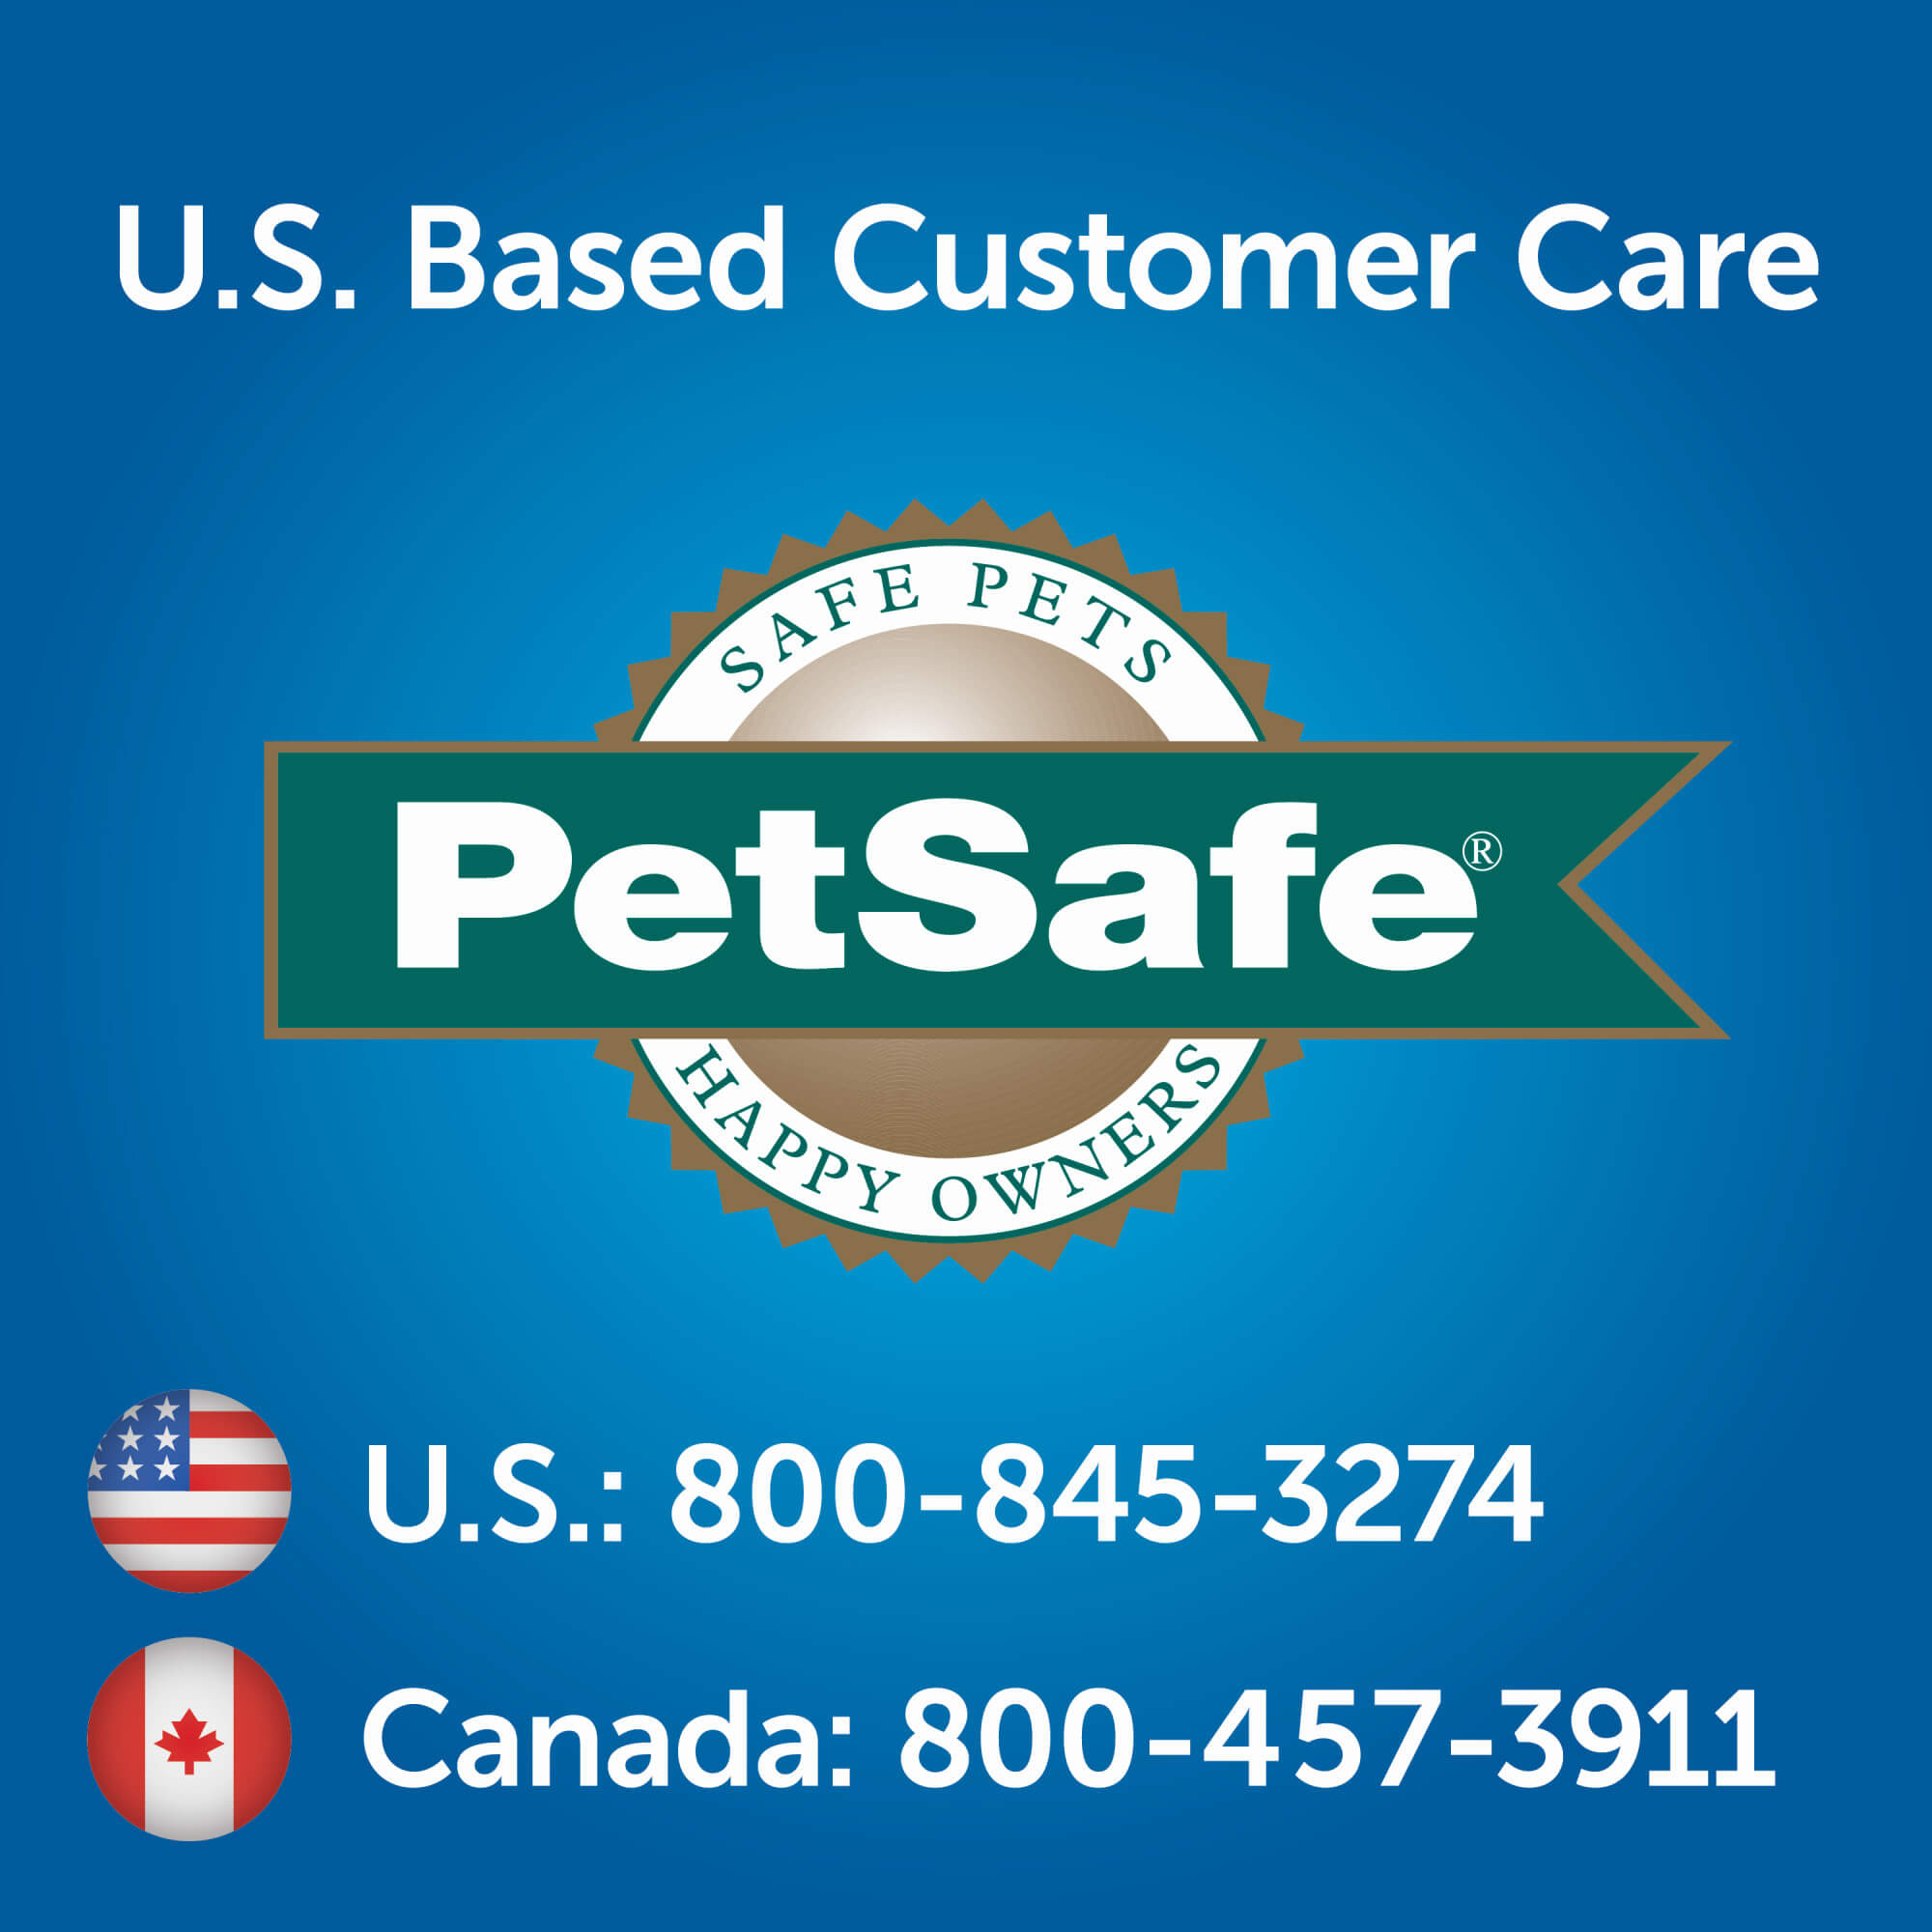 Petsafe dog collar and remote trainer U.S based customer care